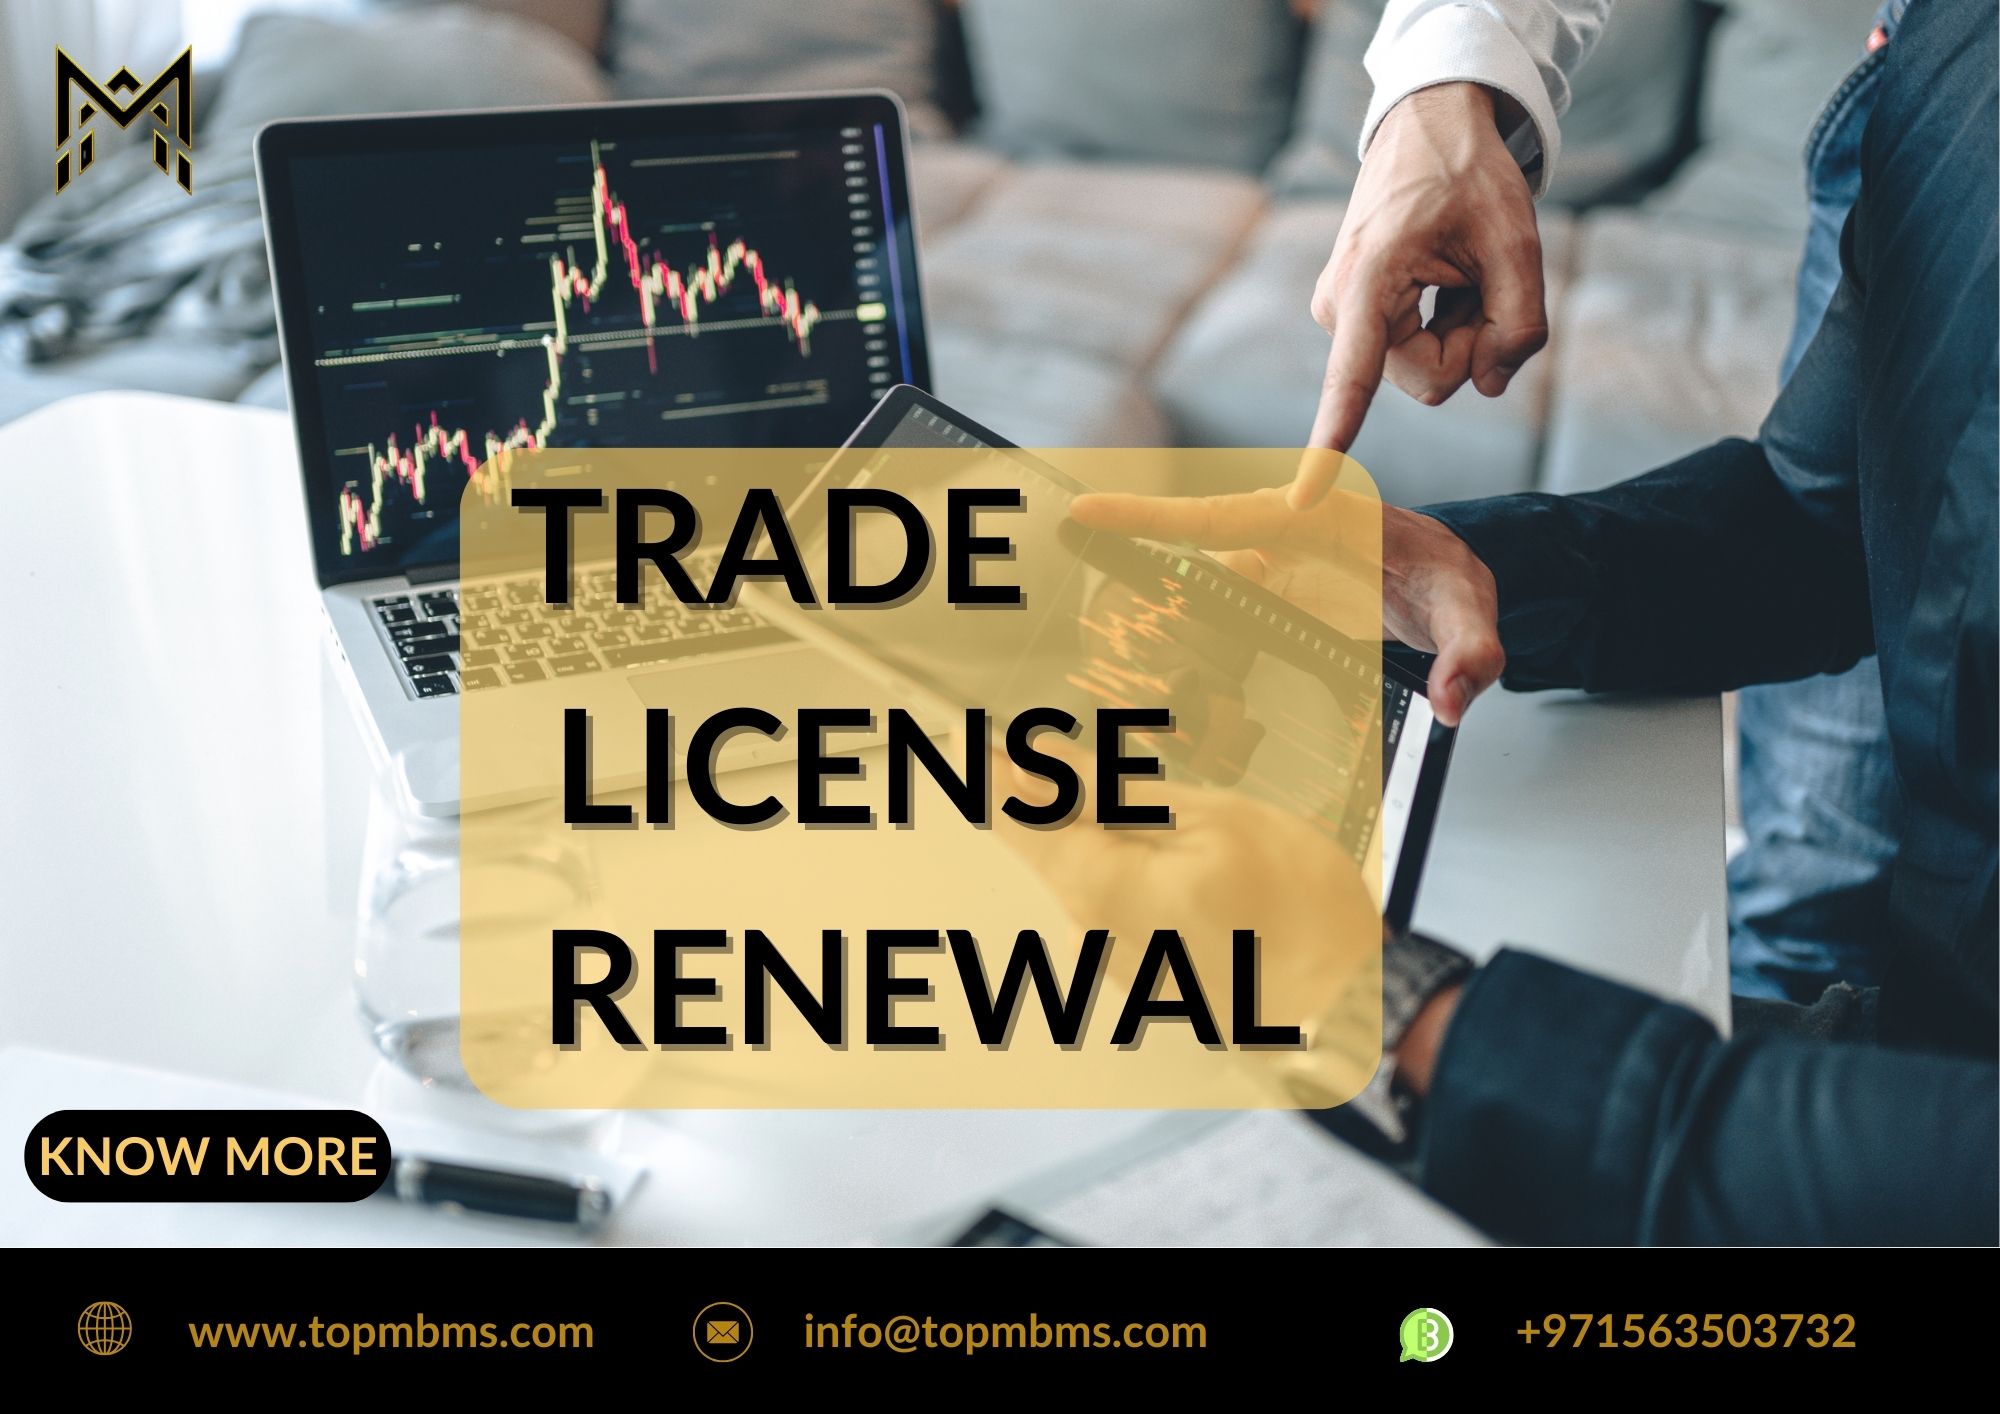 Trade License Renewal #0563503402/0563503732